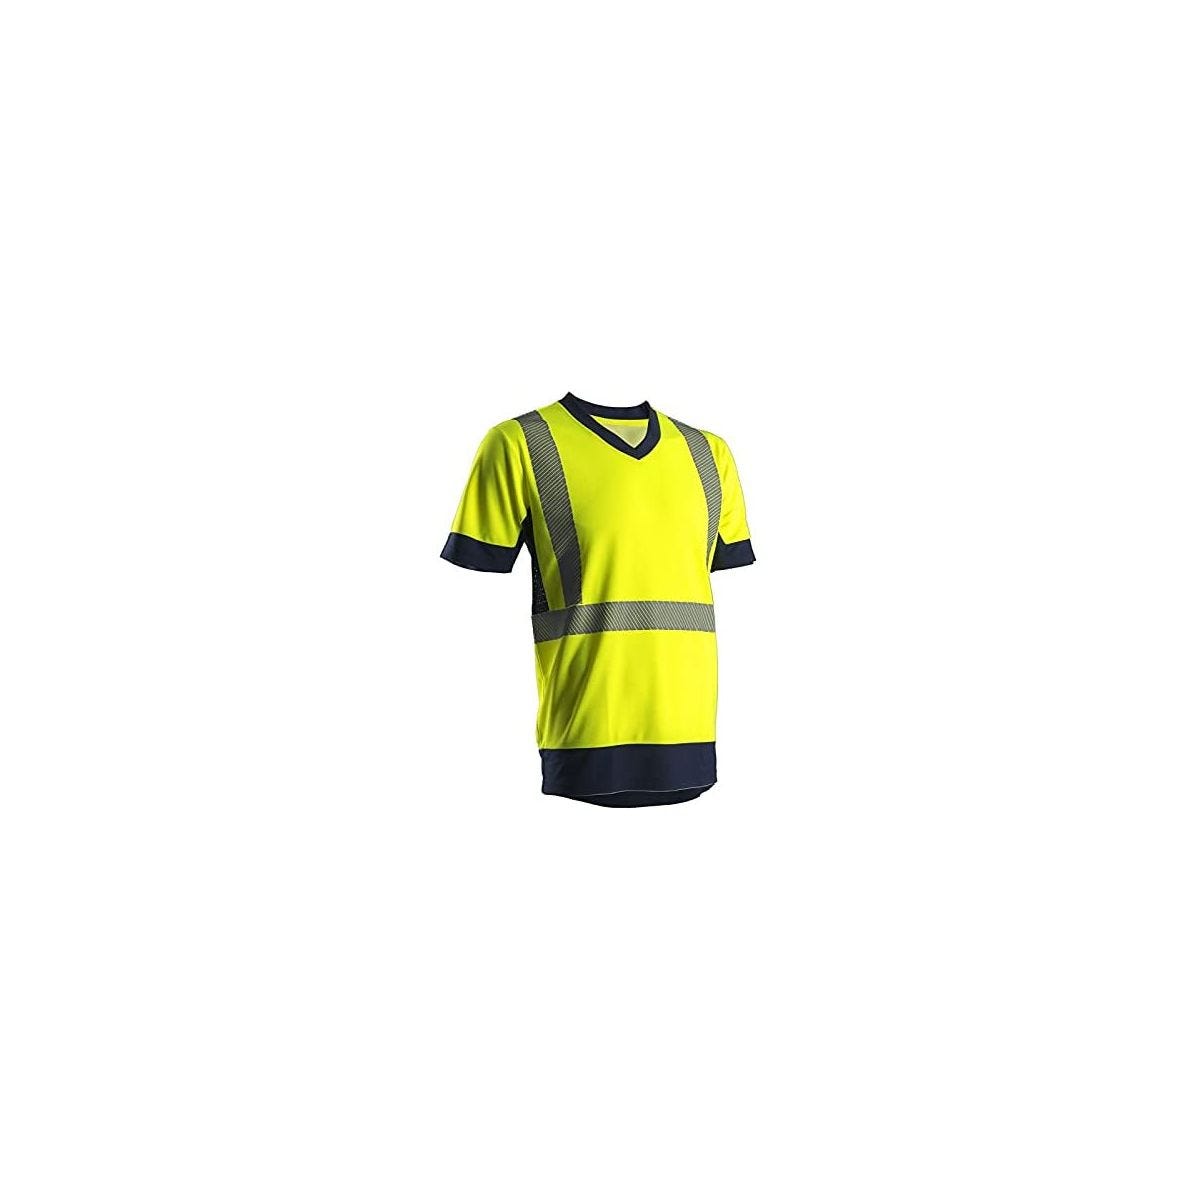 KYRIA T-shirt MC, jaune HV/marine, 100% polyester, 140g/m² - COVERGUARD - Taille L 0